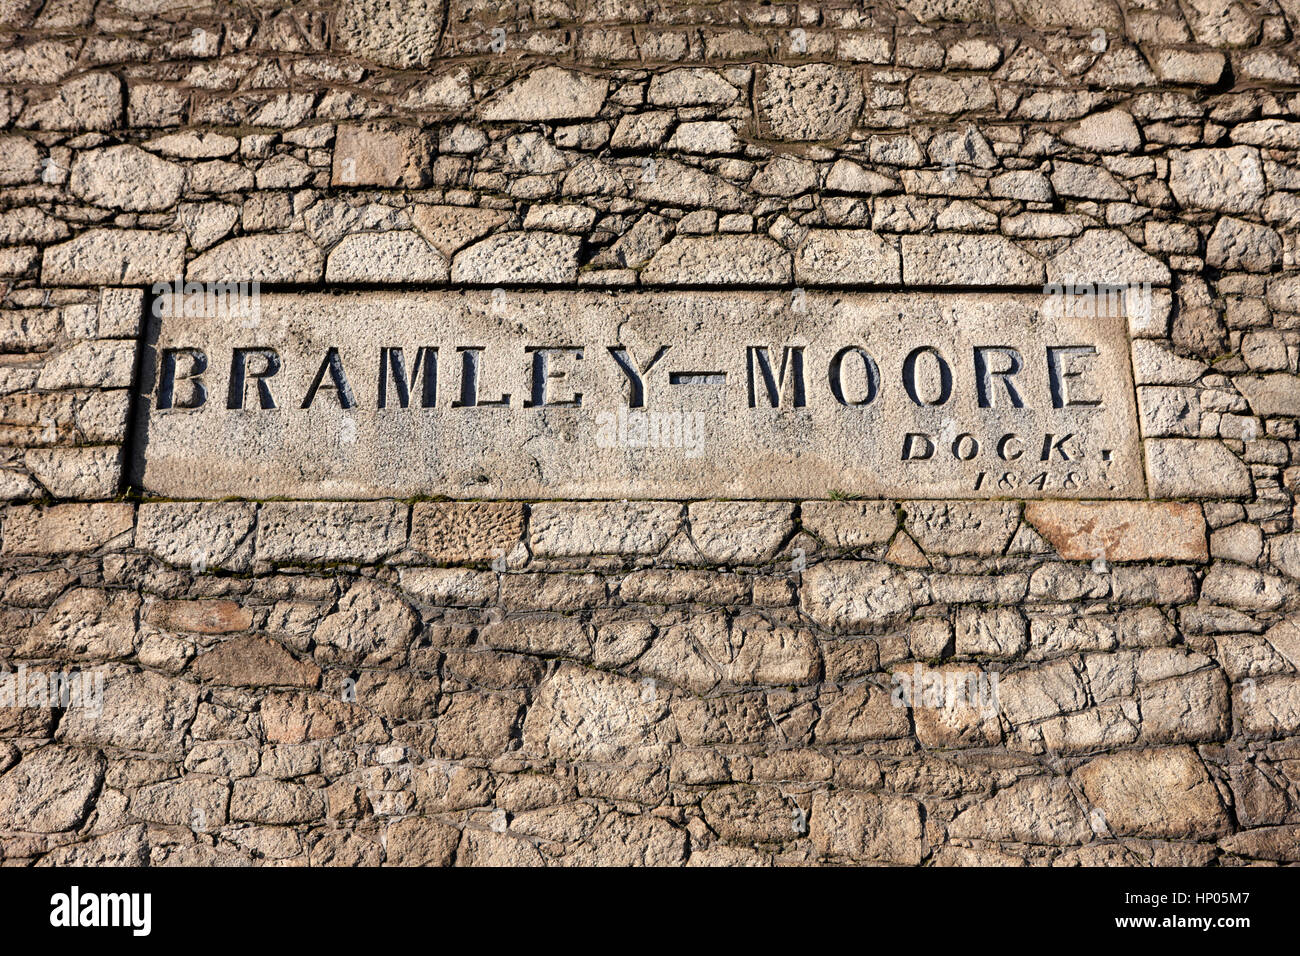 Bramley-moore dock liverpool docks dockland regno unito Foto Stock